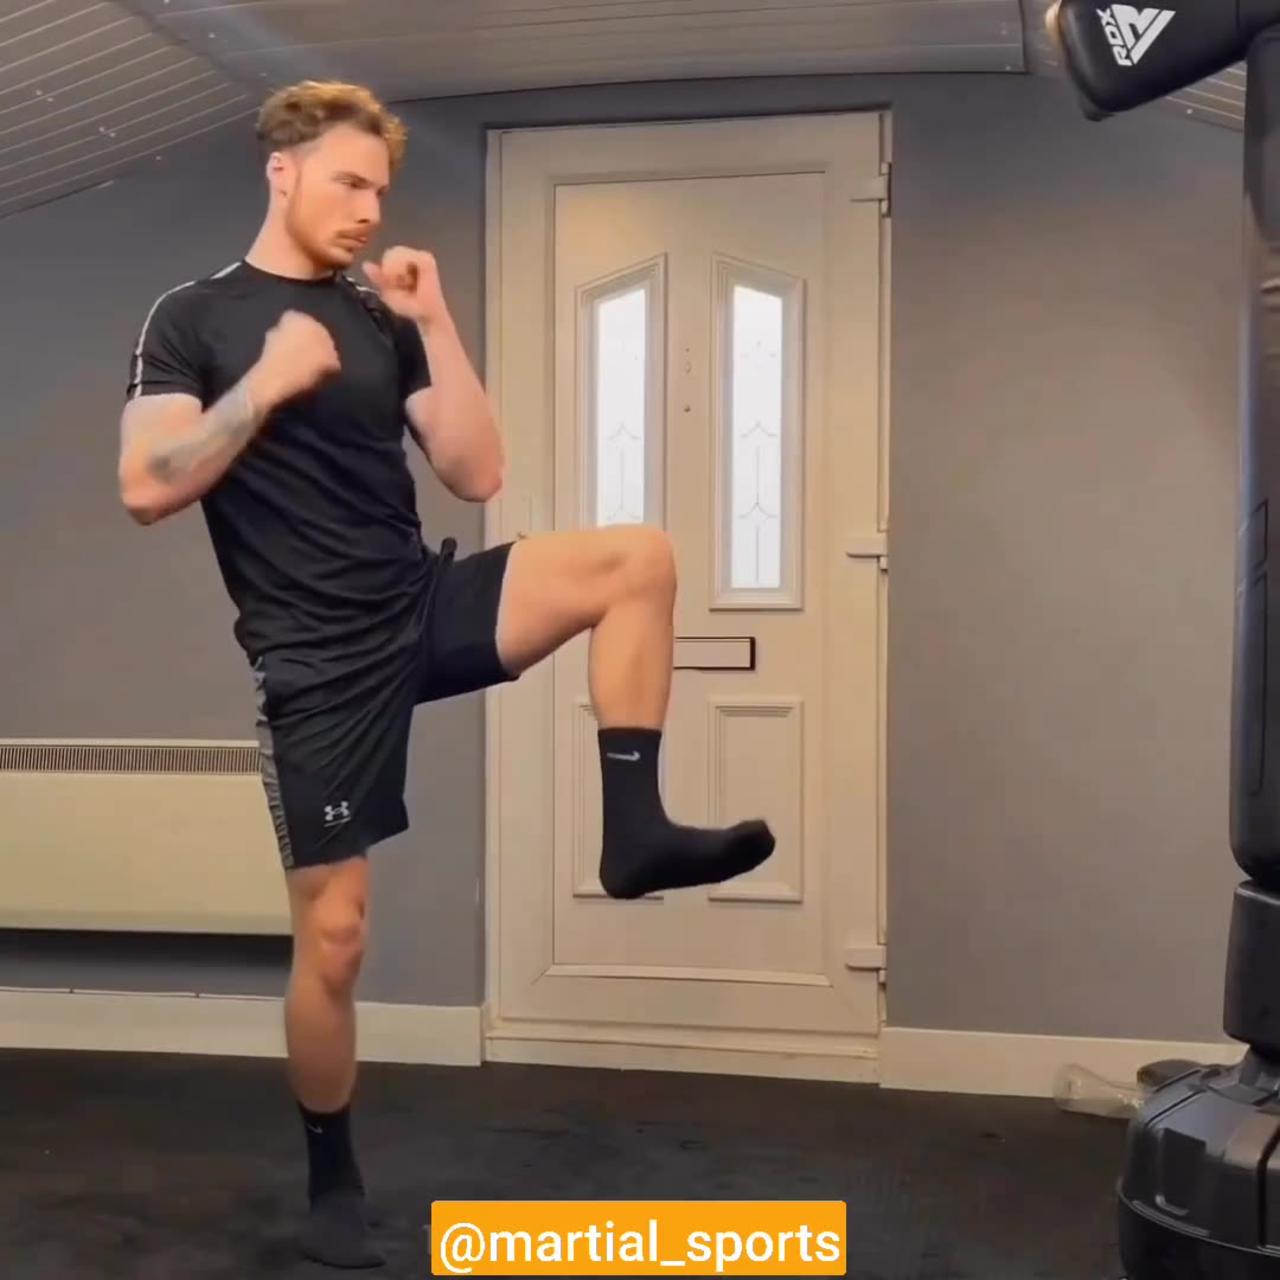 360 degree spin kick training